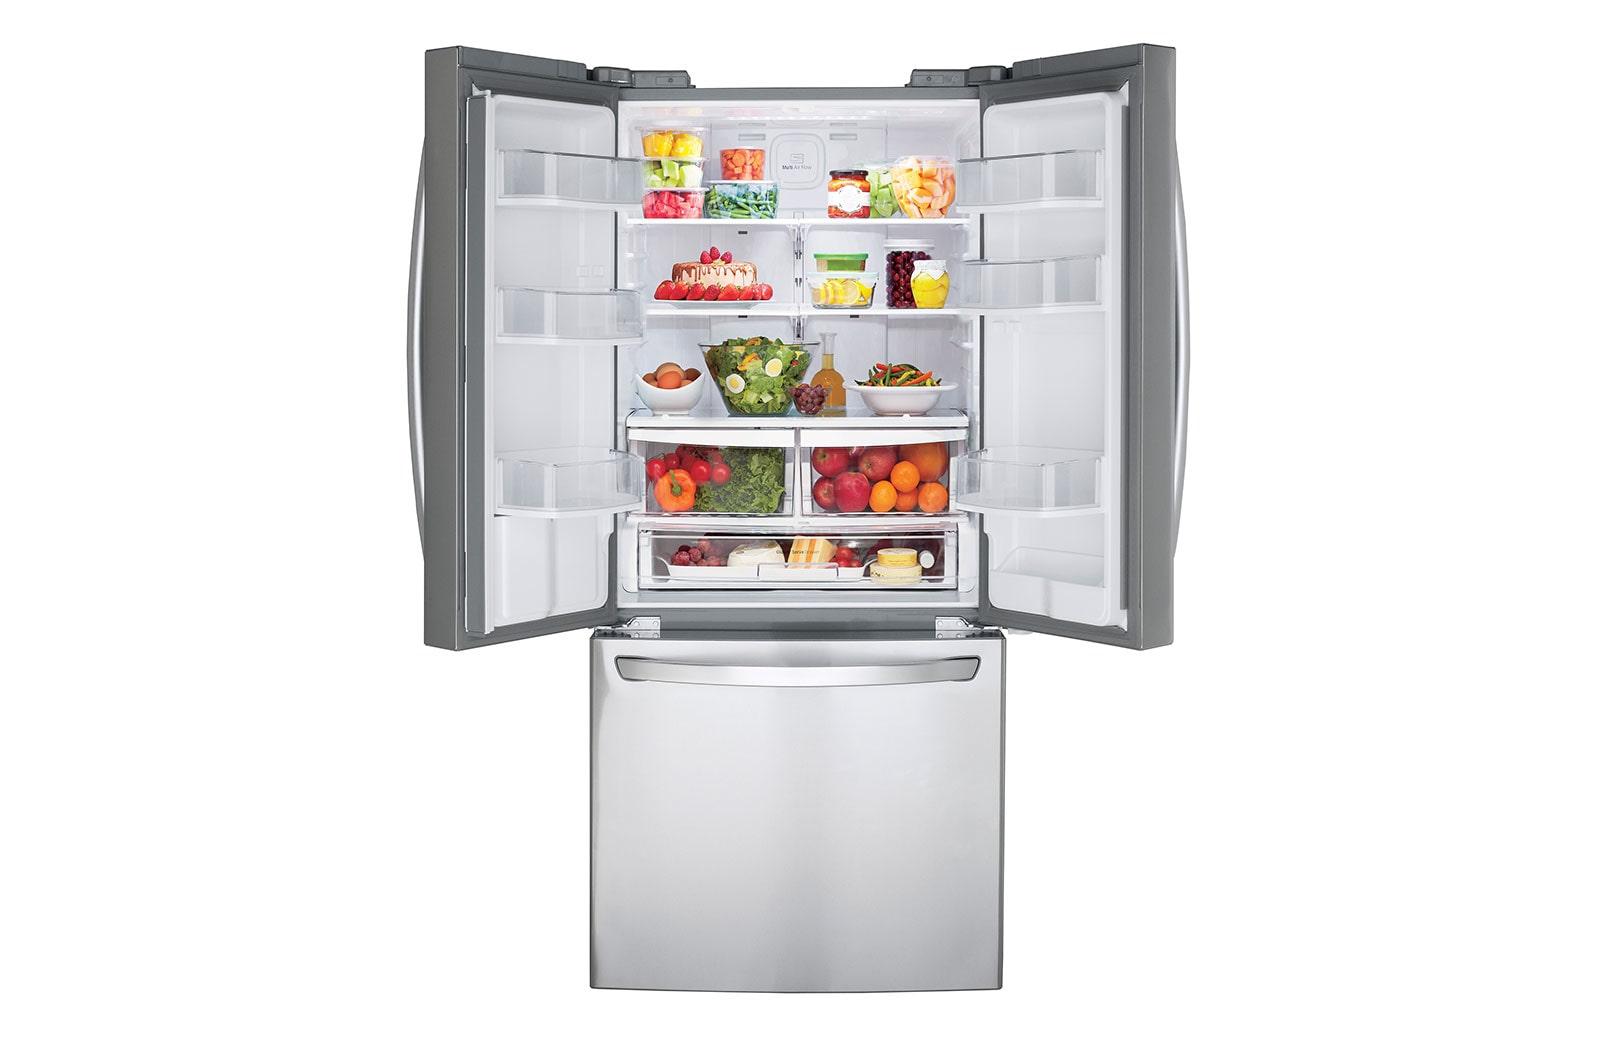 LG LFDS22520S 22 cu. ft. French Door Refrigerator